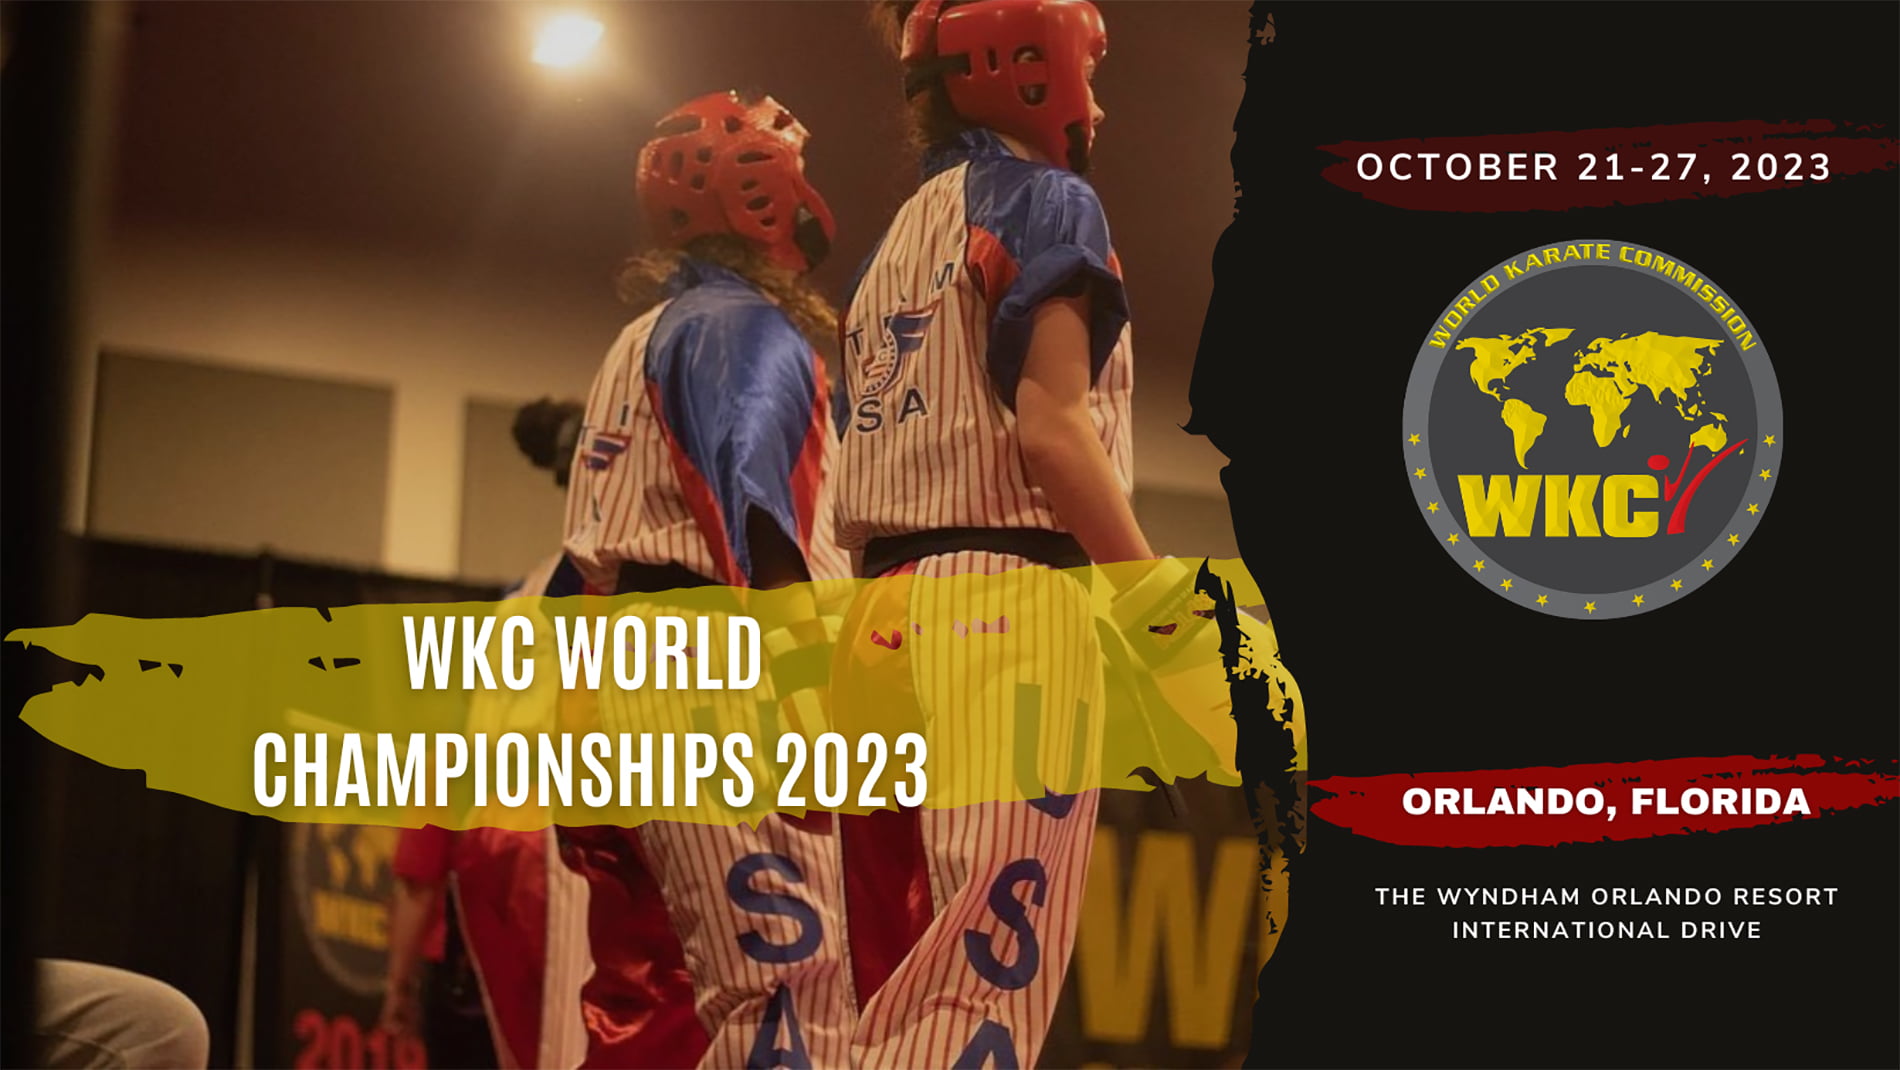 2023 World Championships